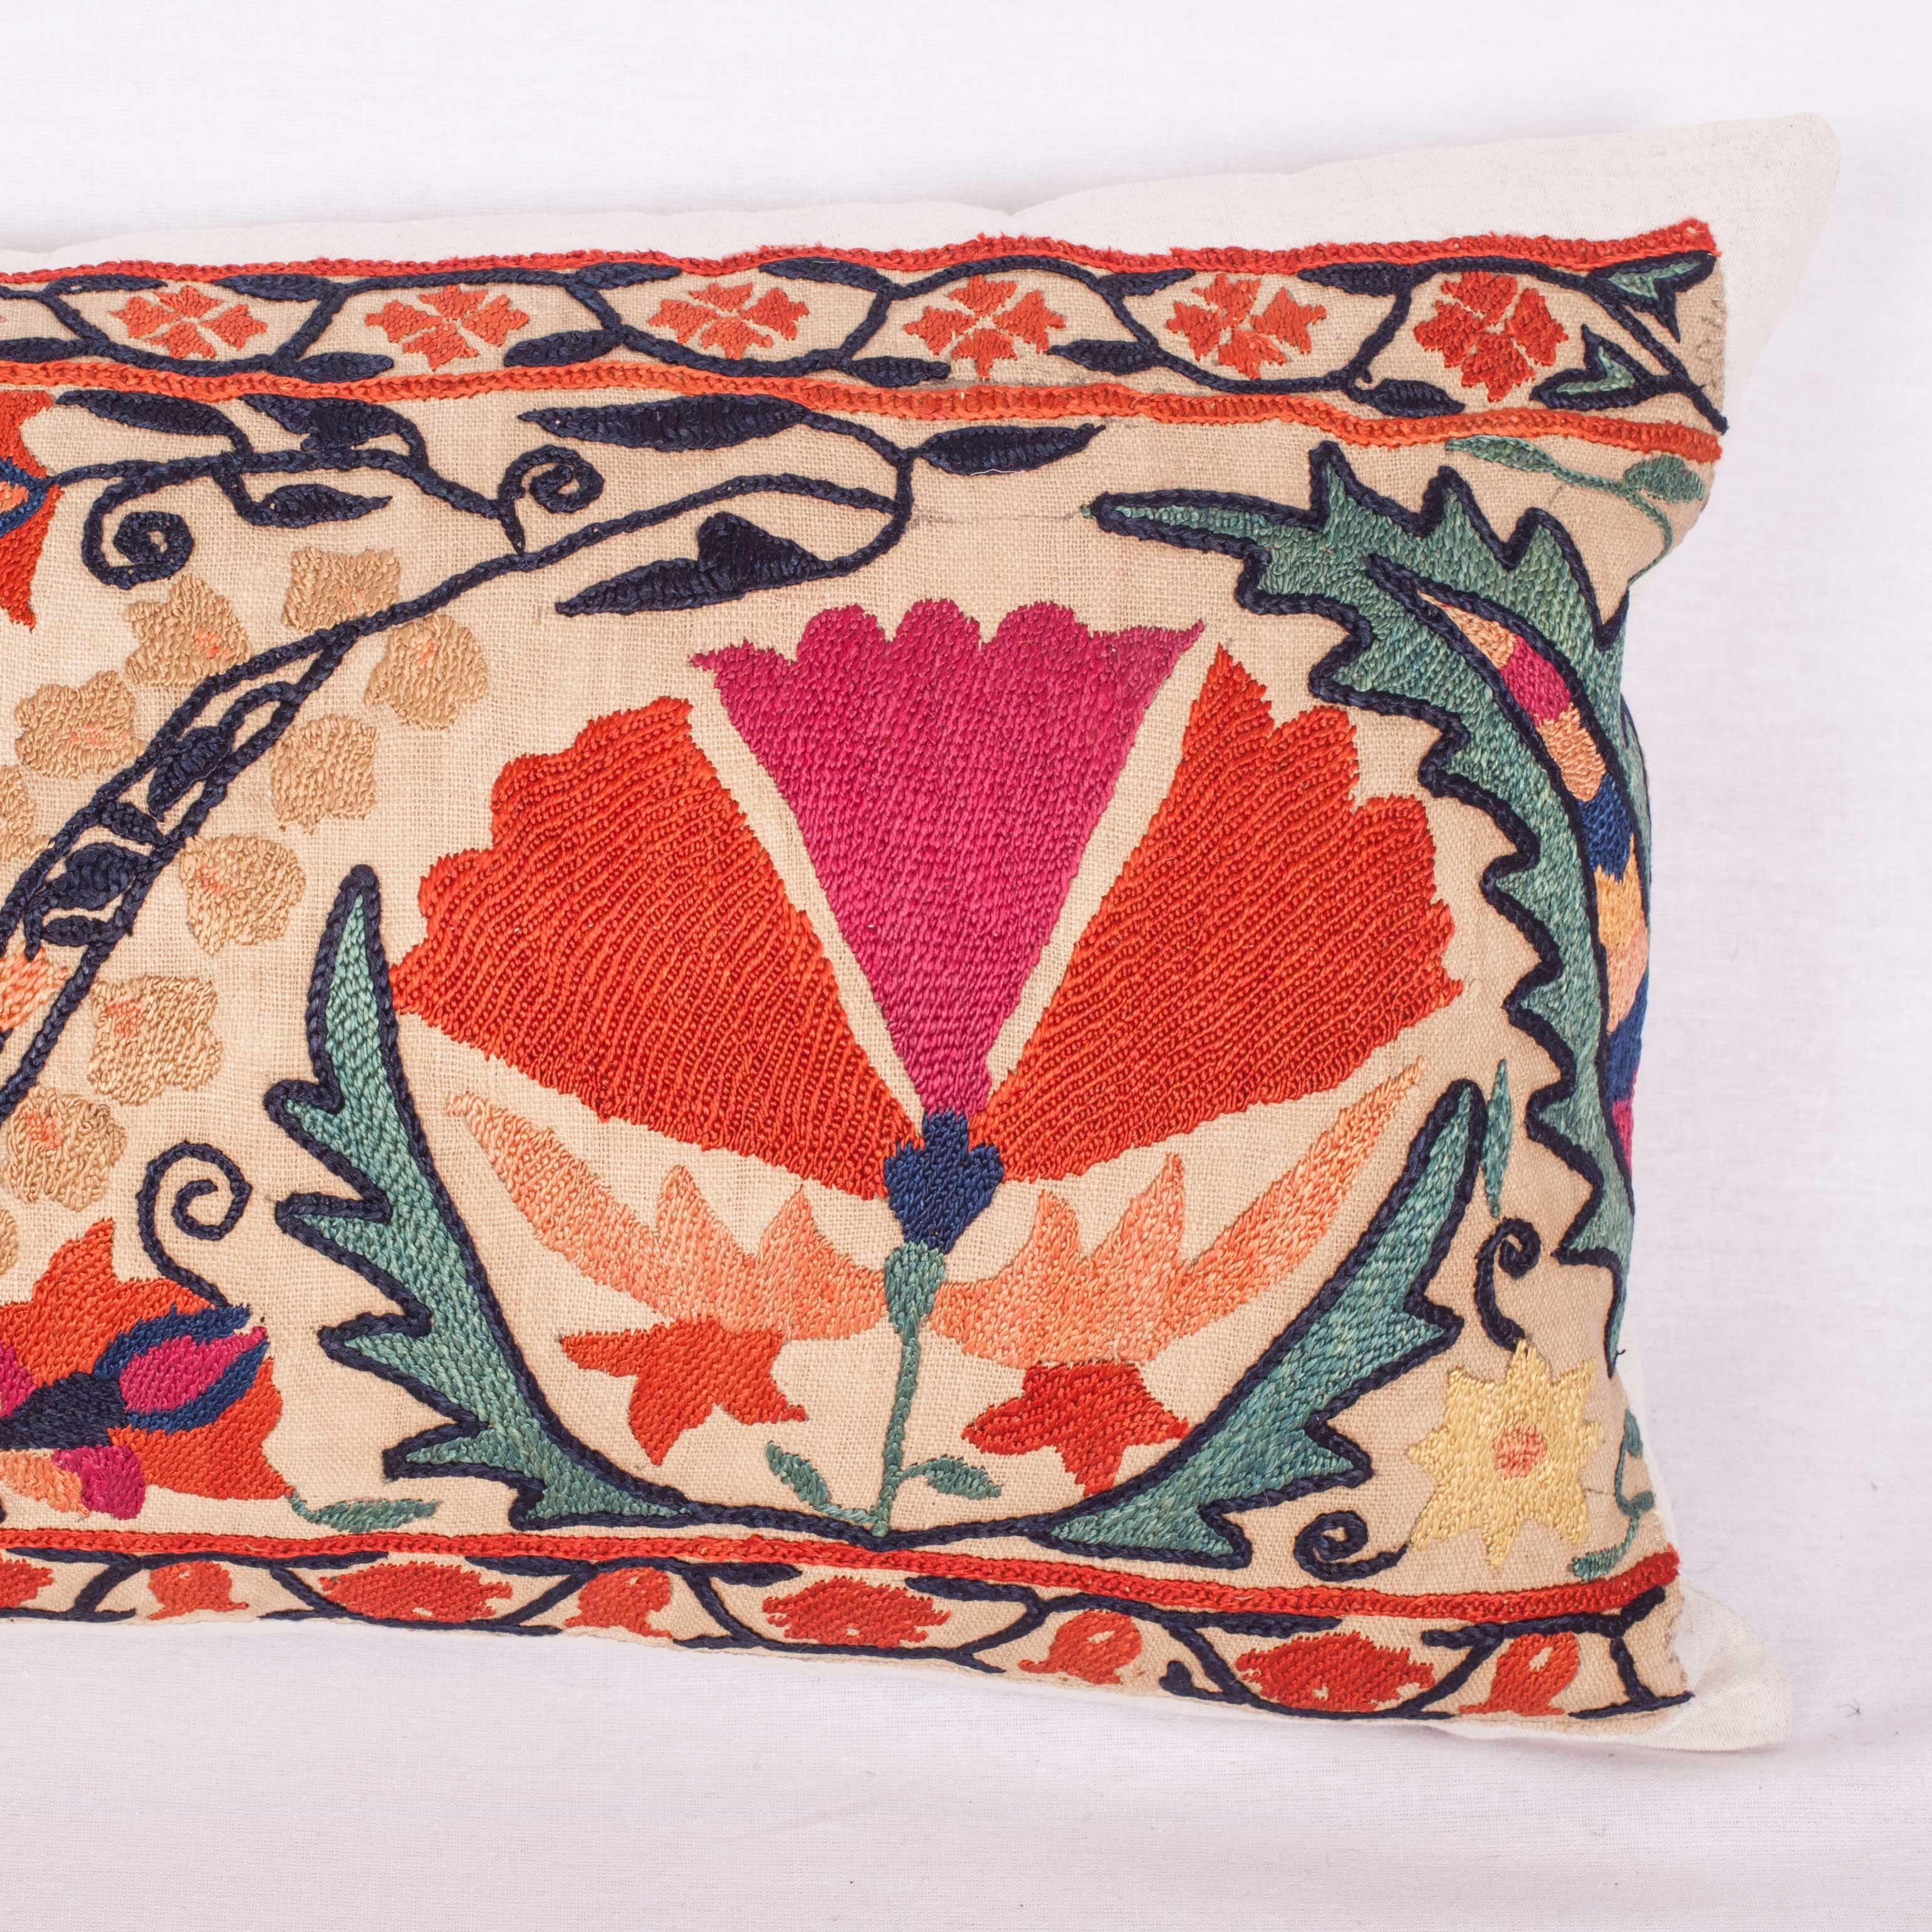 Embroidered Antique Suzani Pillow Fashioned from a 19th Century Nurata Suzani